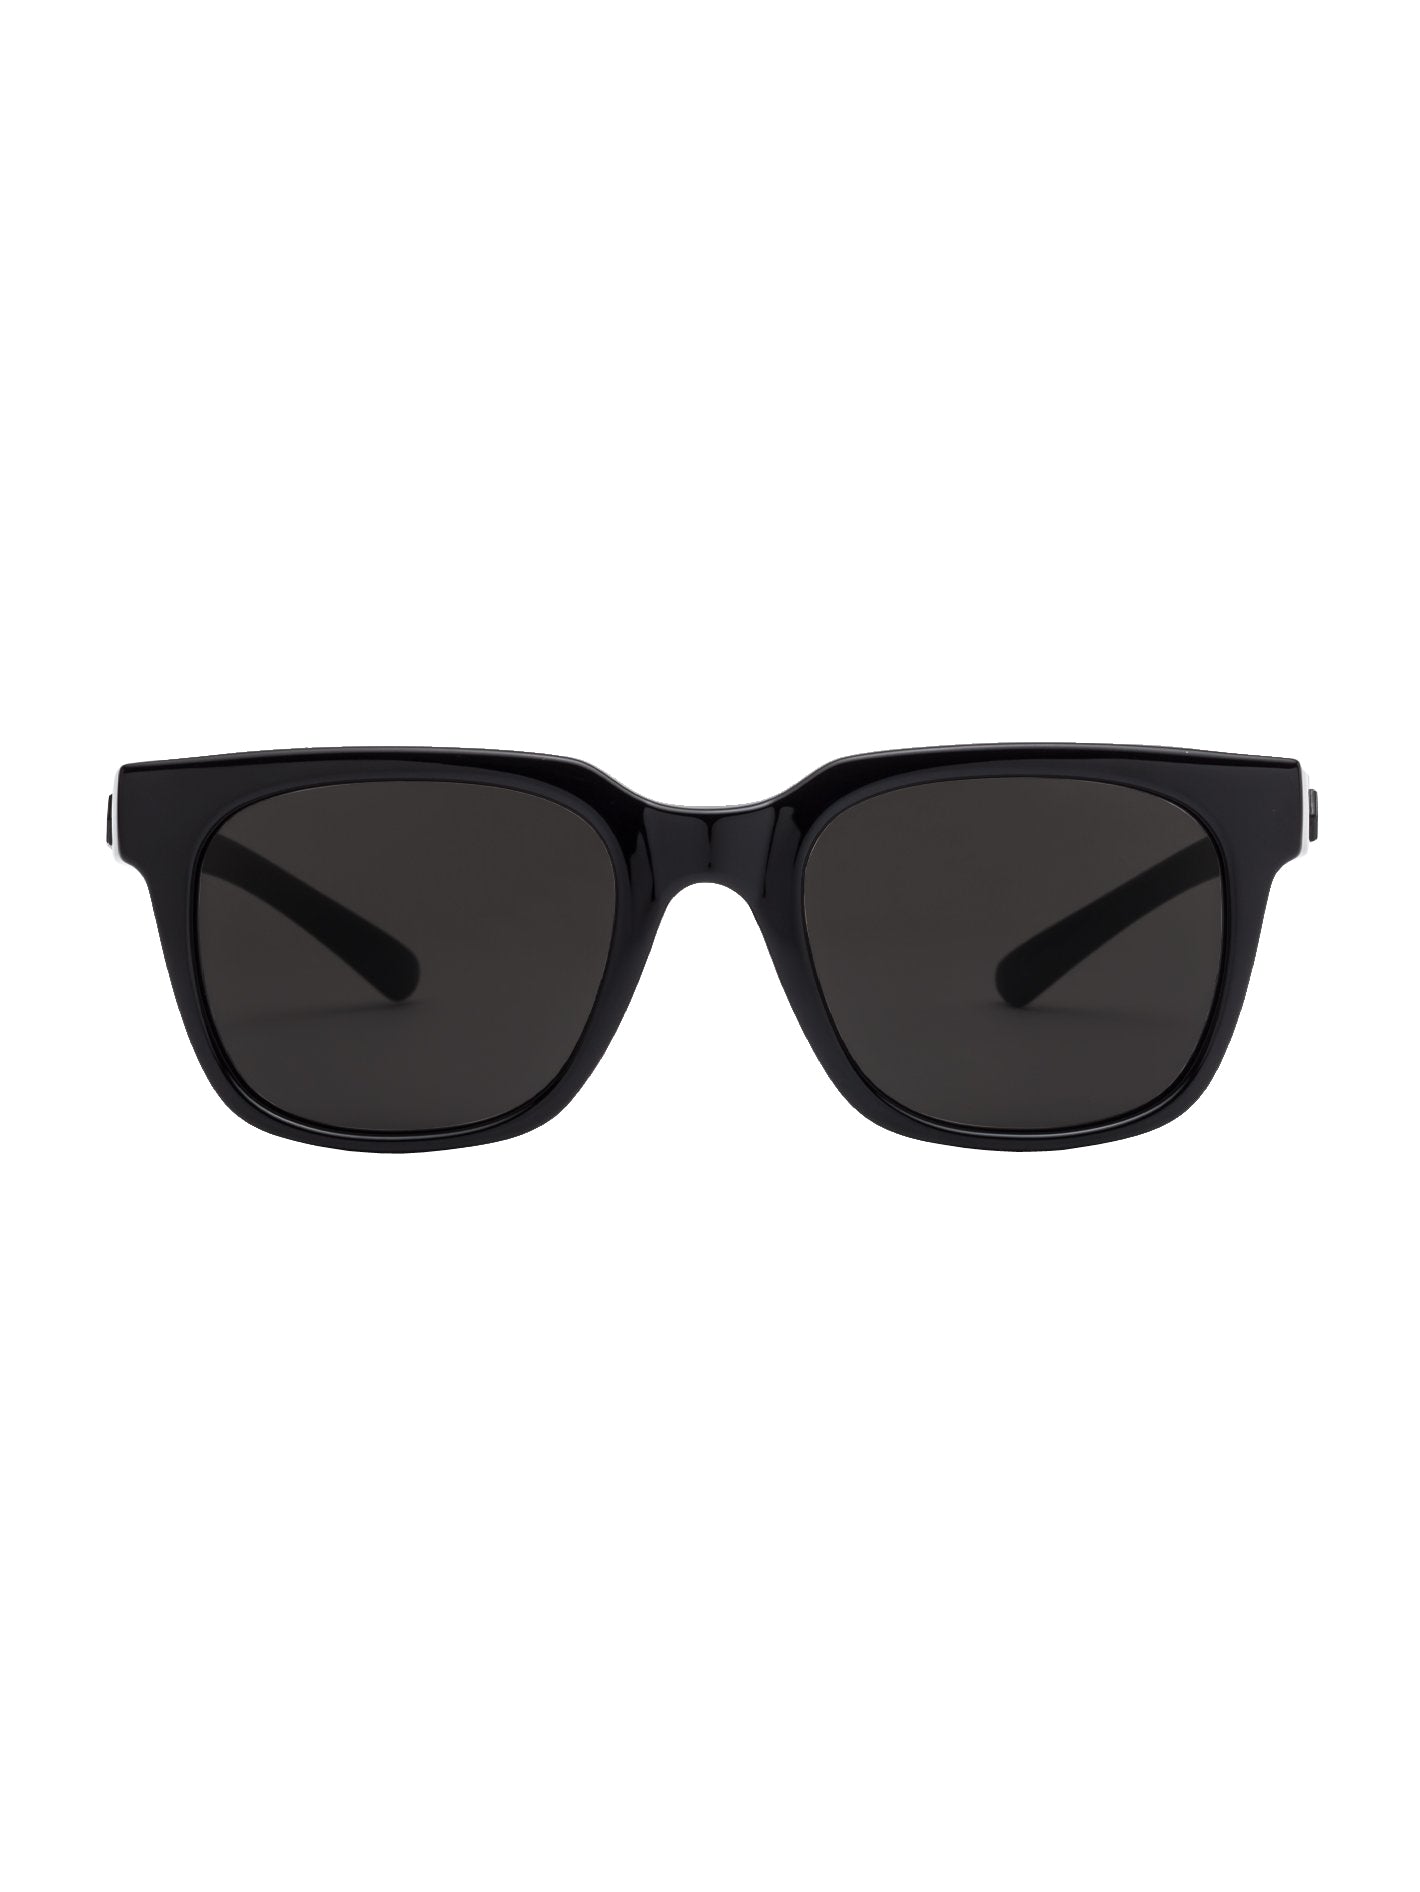 Volcom Morph sunglasses